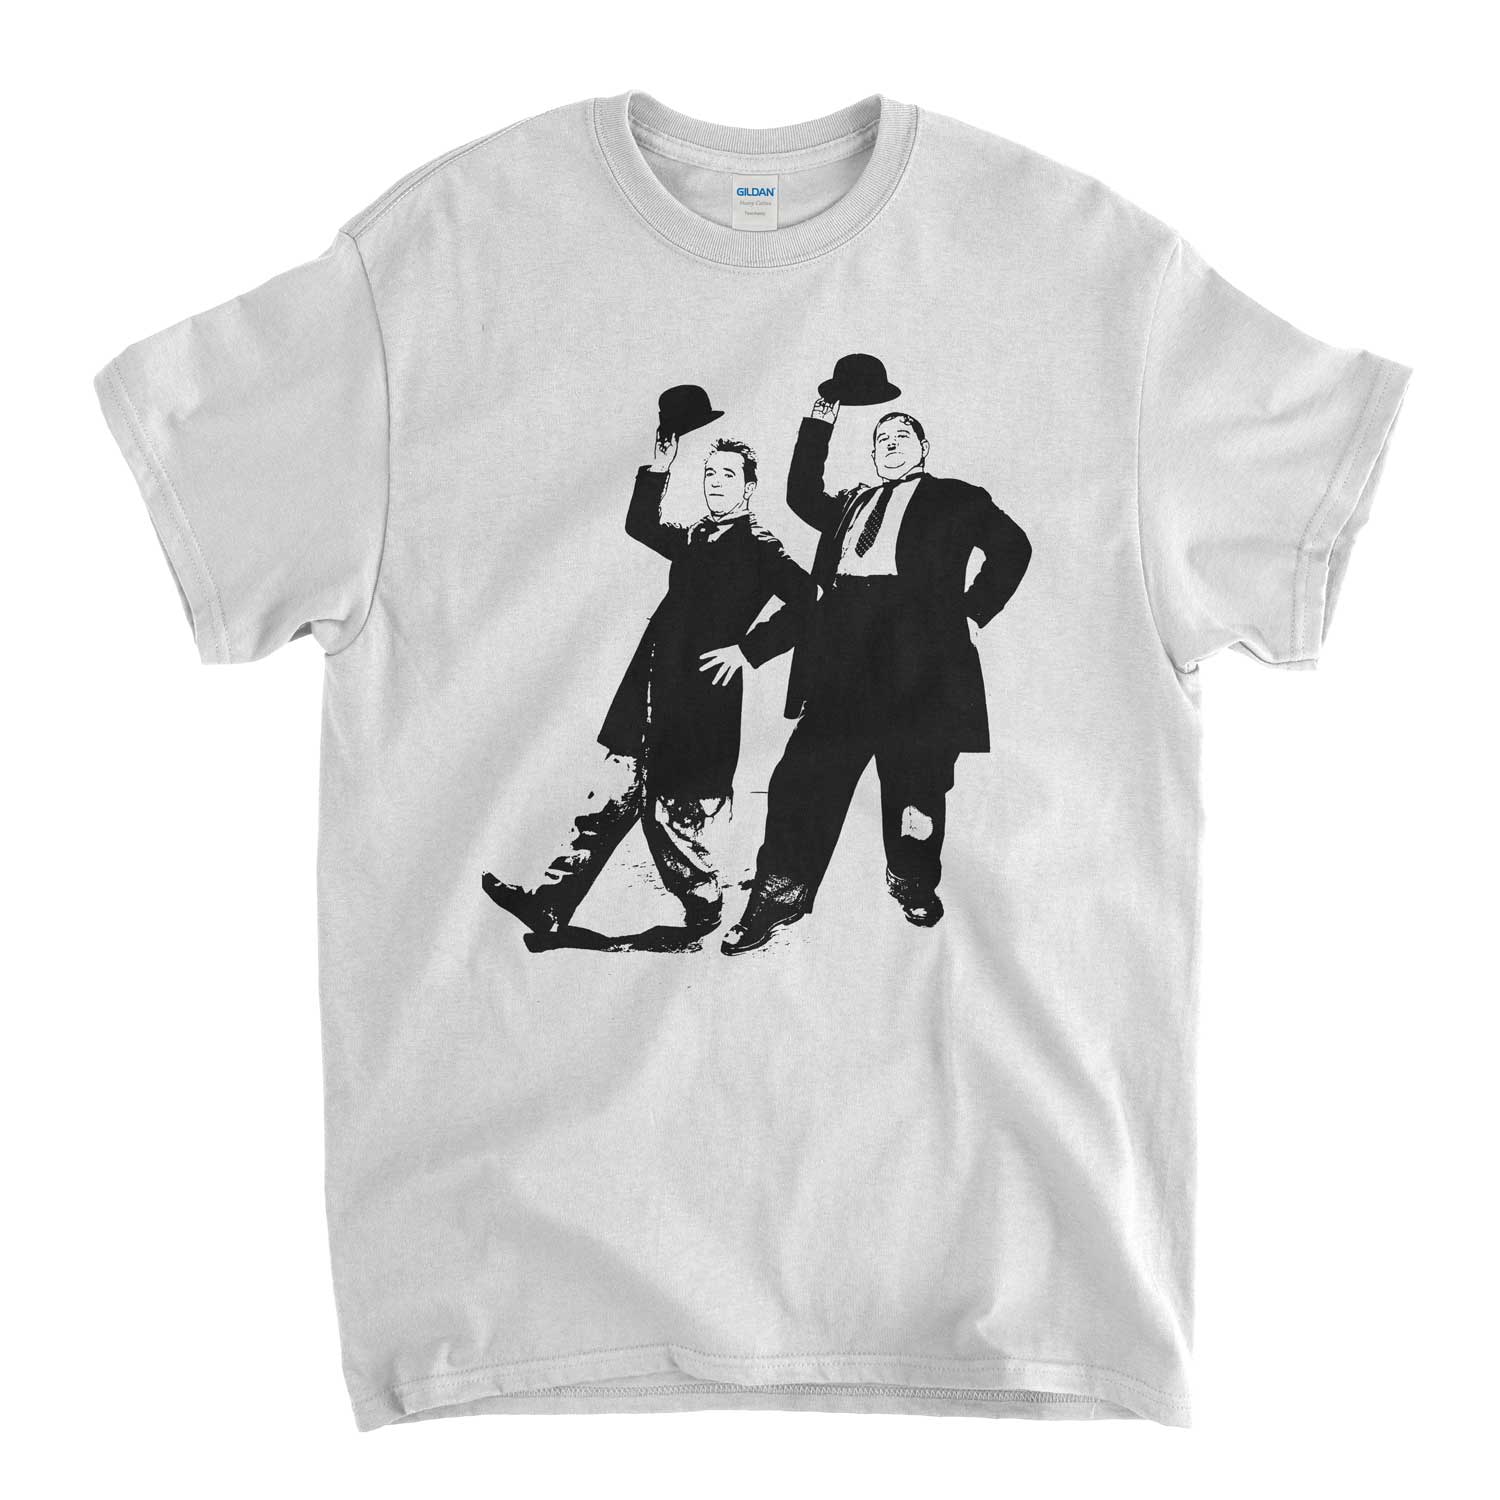 Laurel & Hardy T Shirt - Hats | Old Skool Hooligans Vintage Film Tee